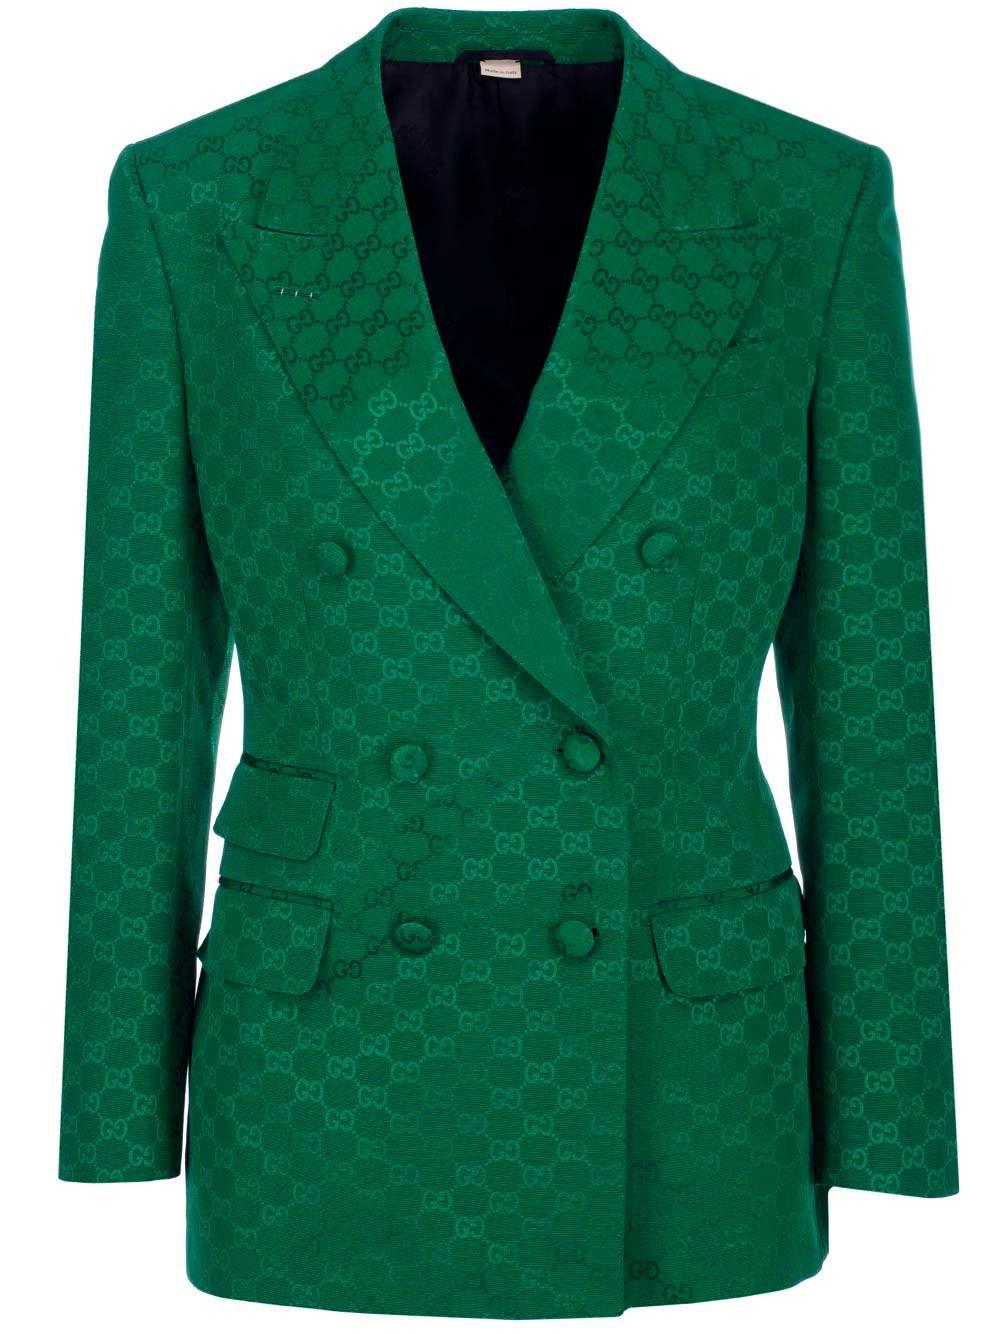 Gucci Green Viscose Blend Fabric Blazer Size 6/40